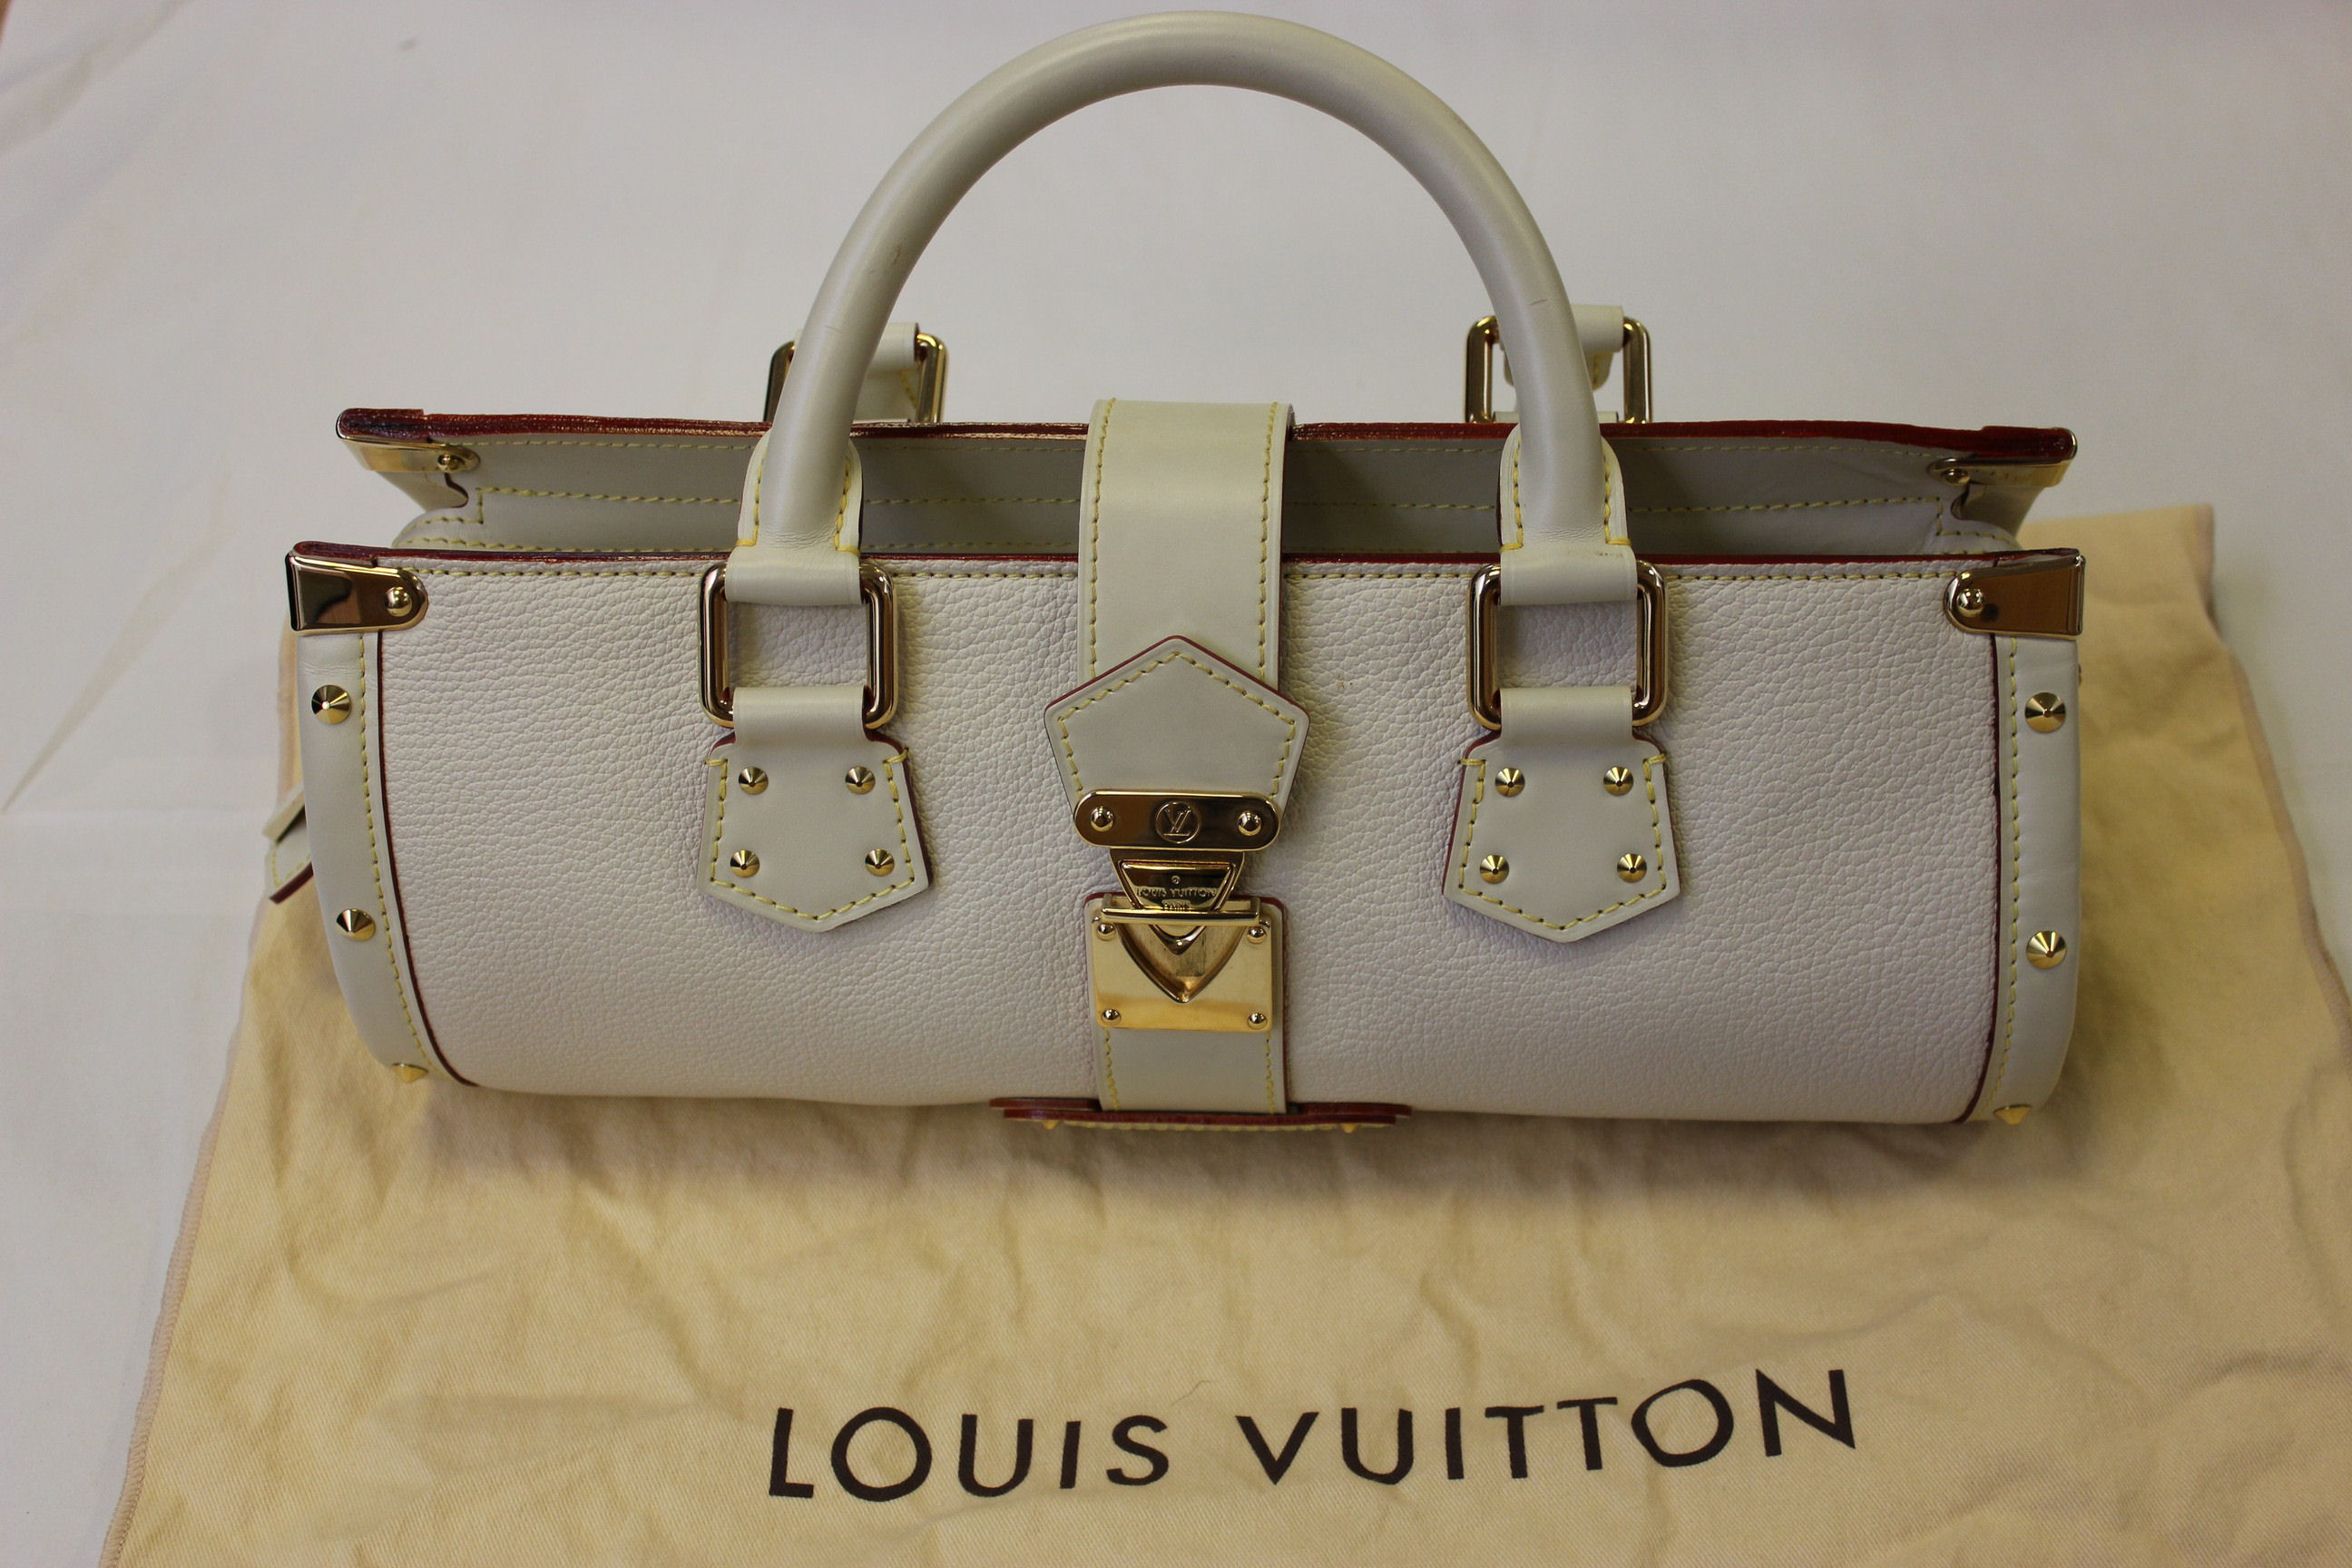 File:Op Gemini - Louis Vuitton bag (12517670914).jpg - Wikimedia Commons